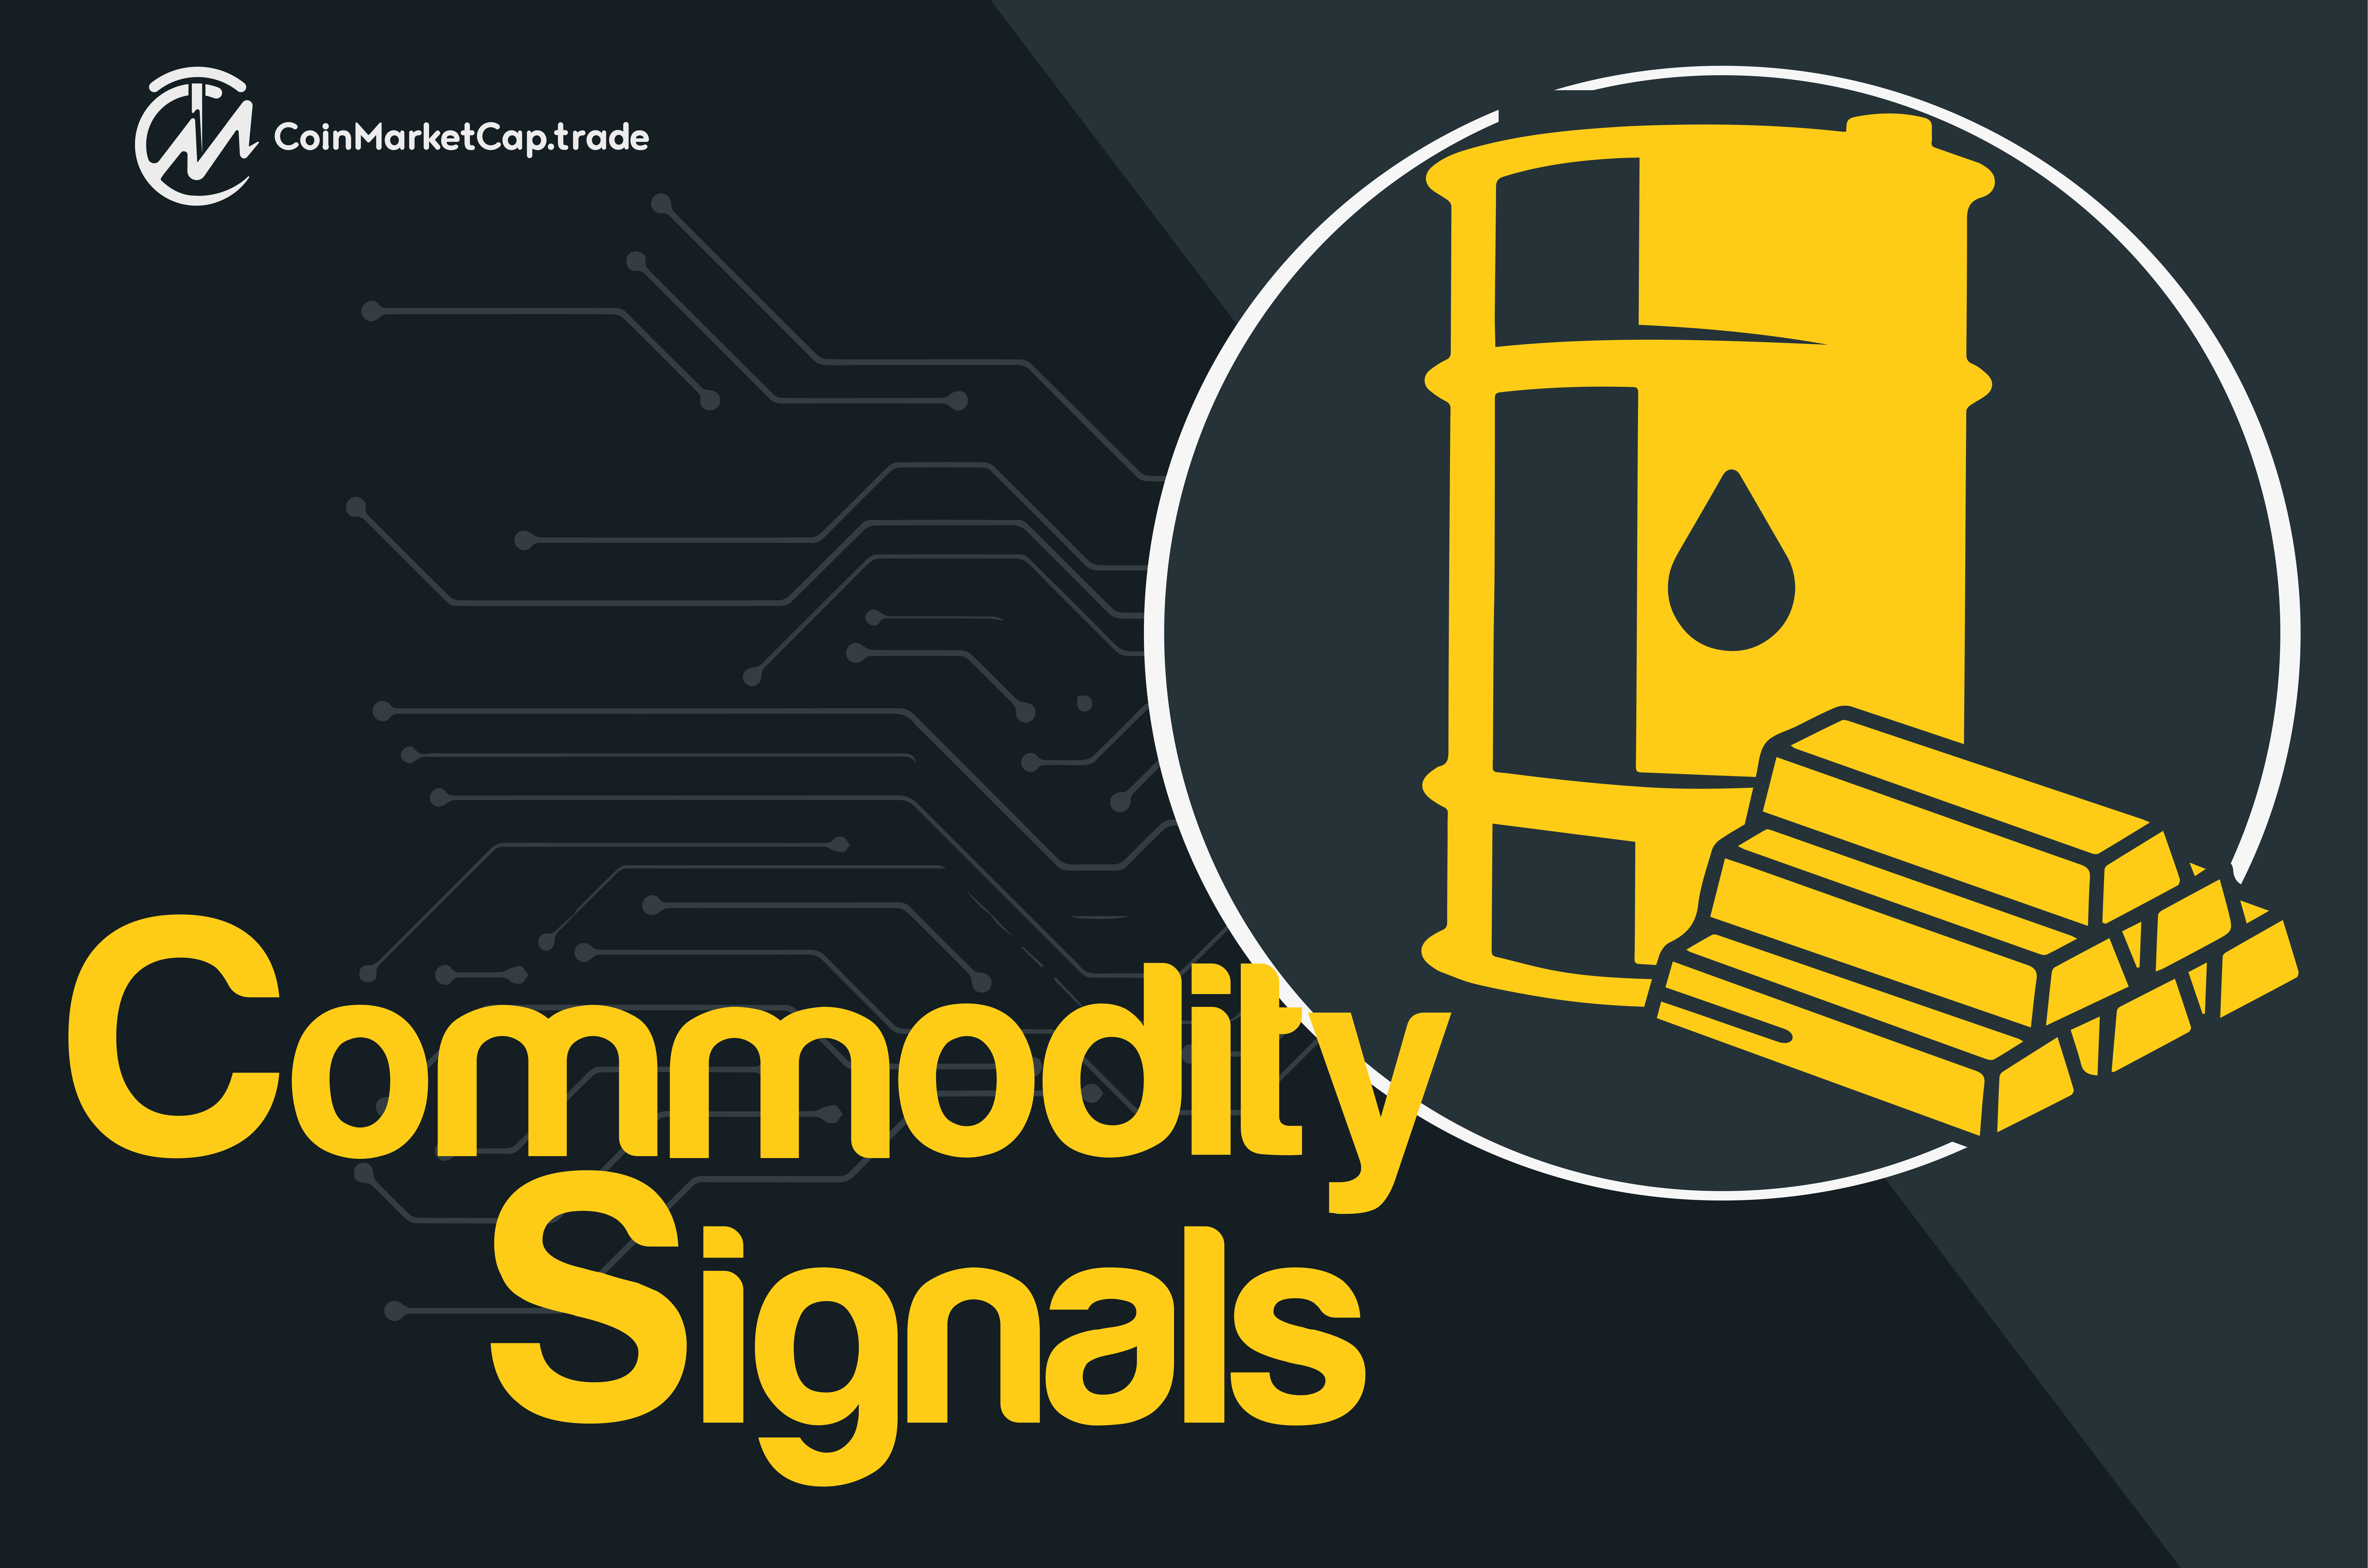 Commodity Signals